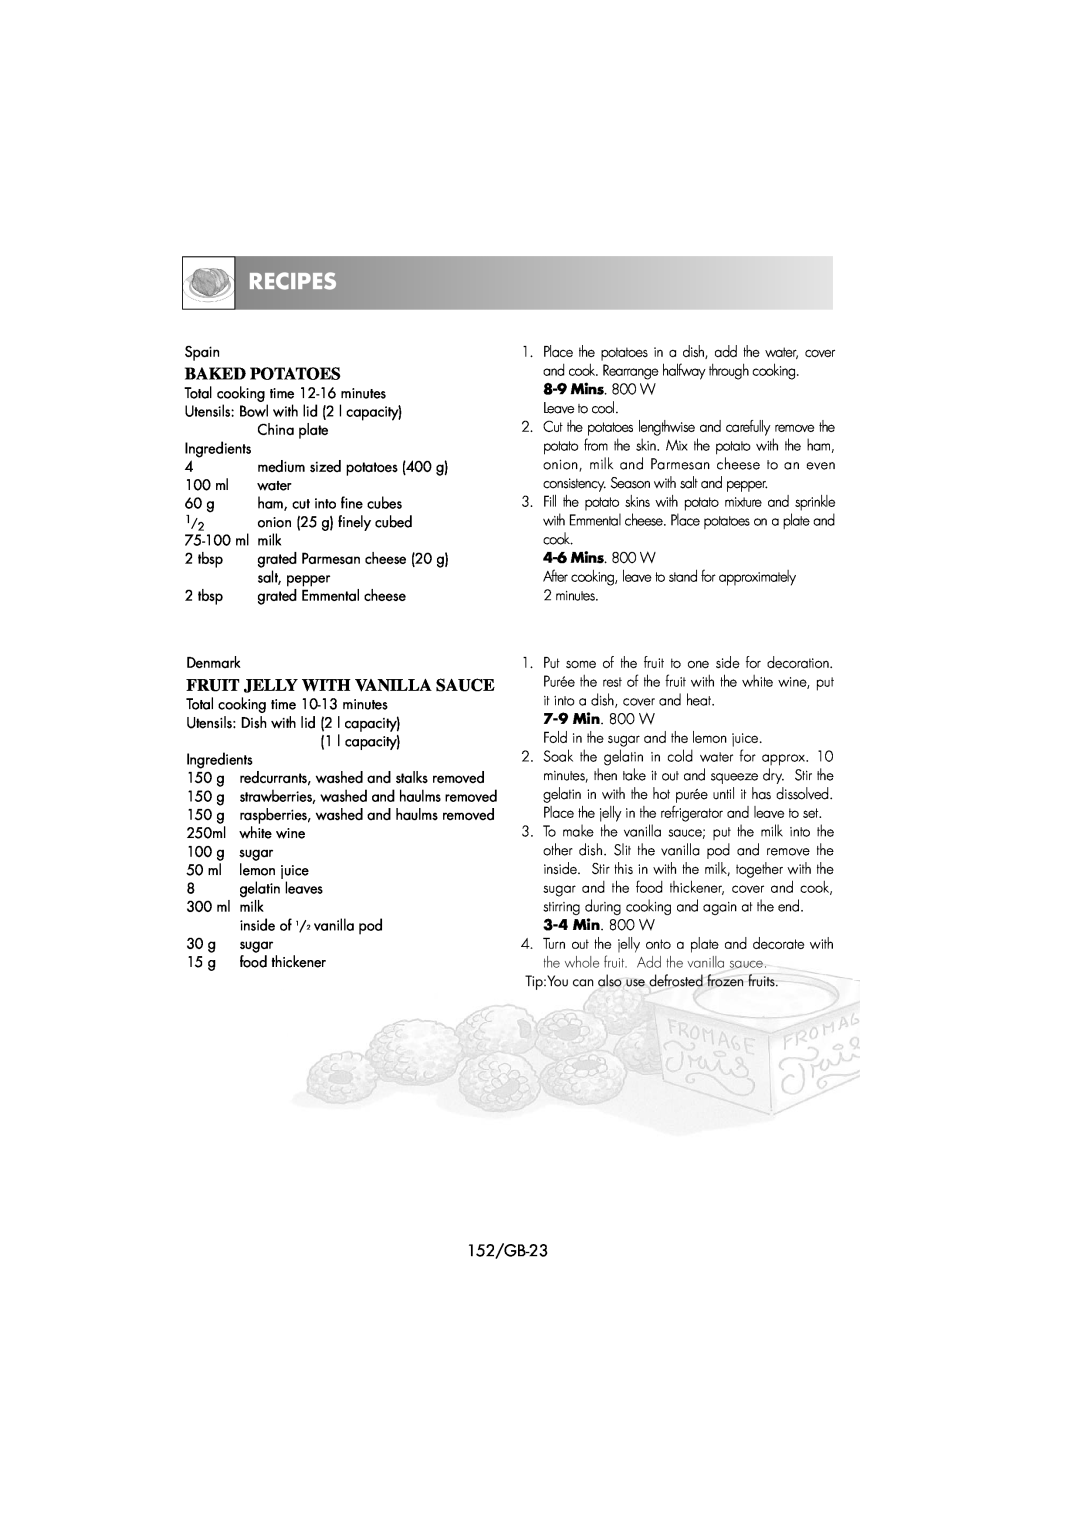 Sharp R-239 operation manual Baked Potatoes, Fruit Jelly With Vanilla Sauce, Recipes, 152/GB-23 